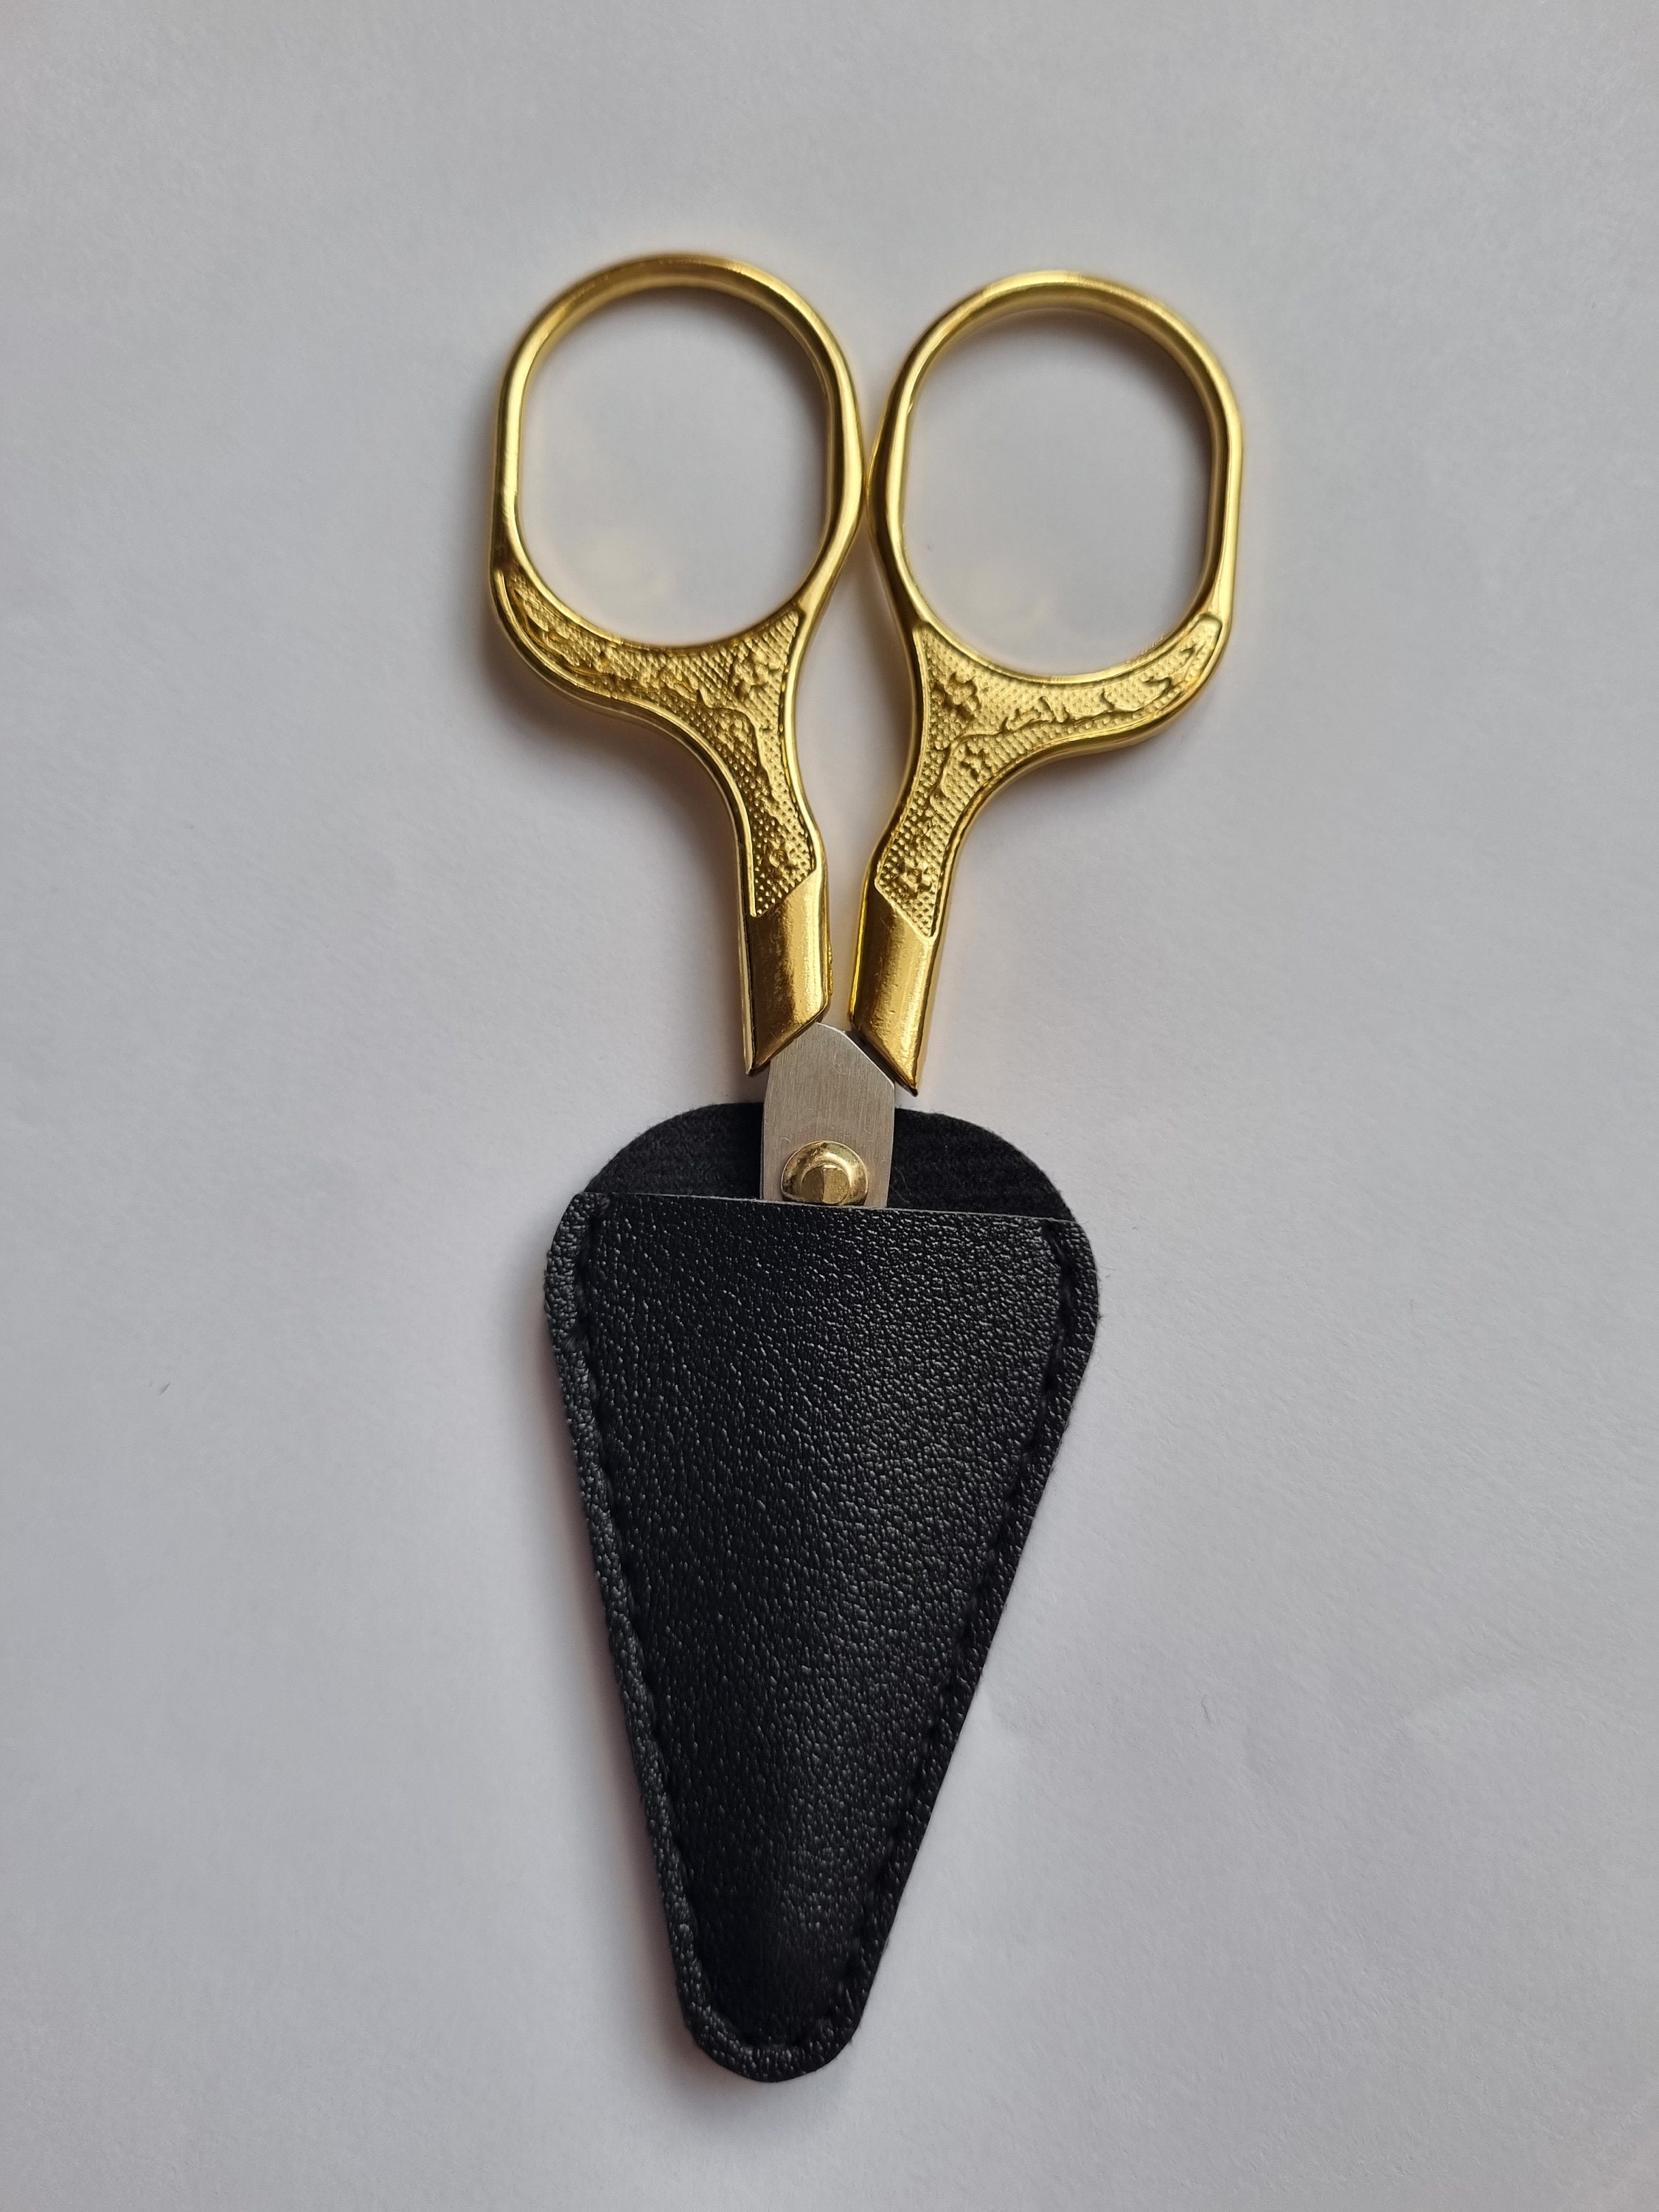 Japanese Leather Scissors